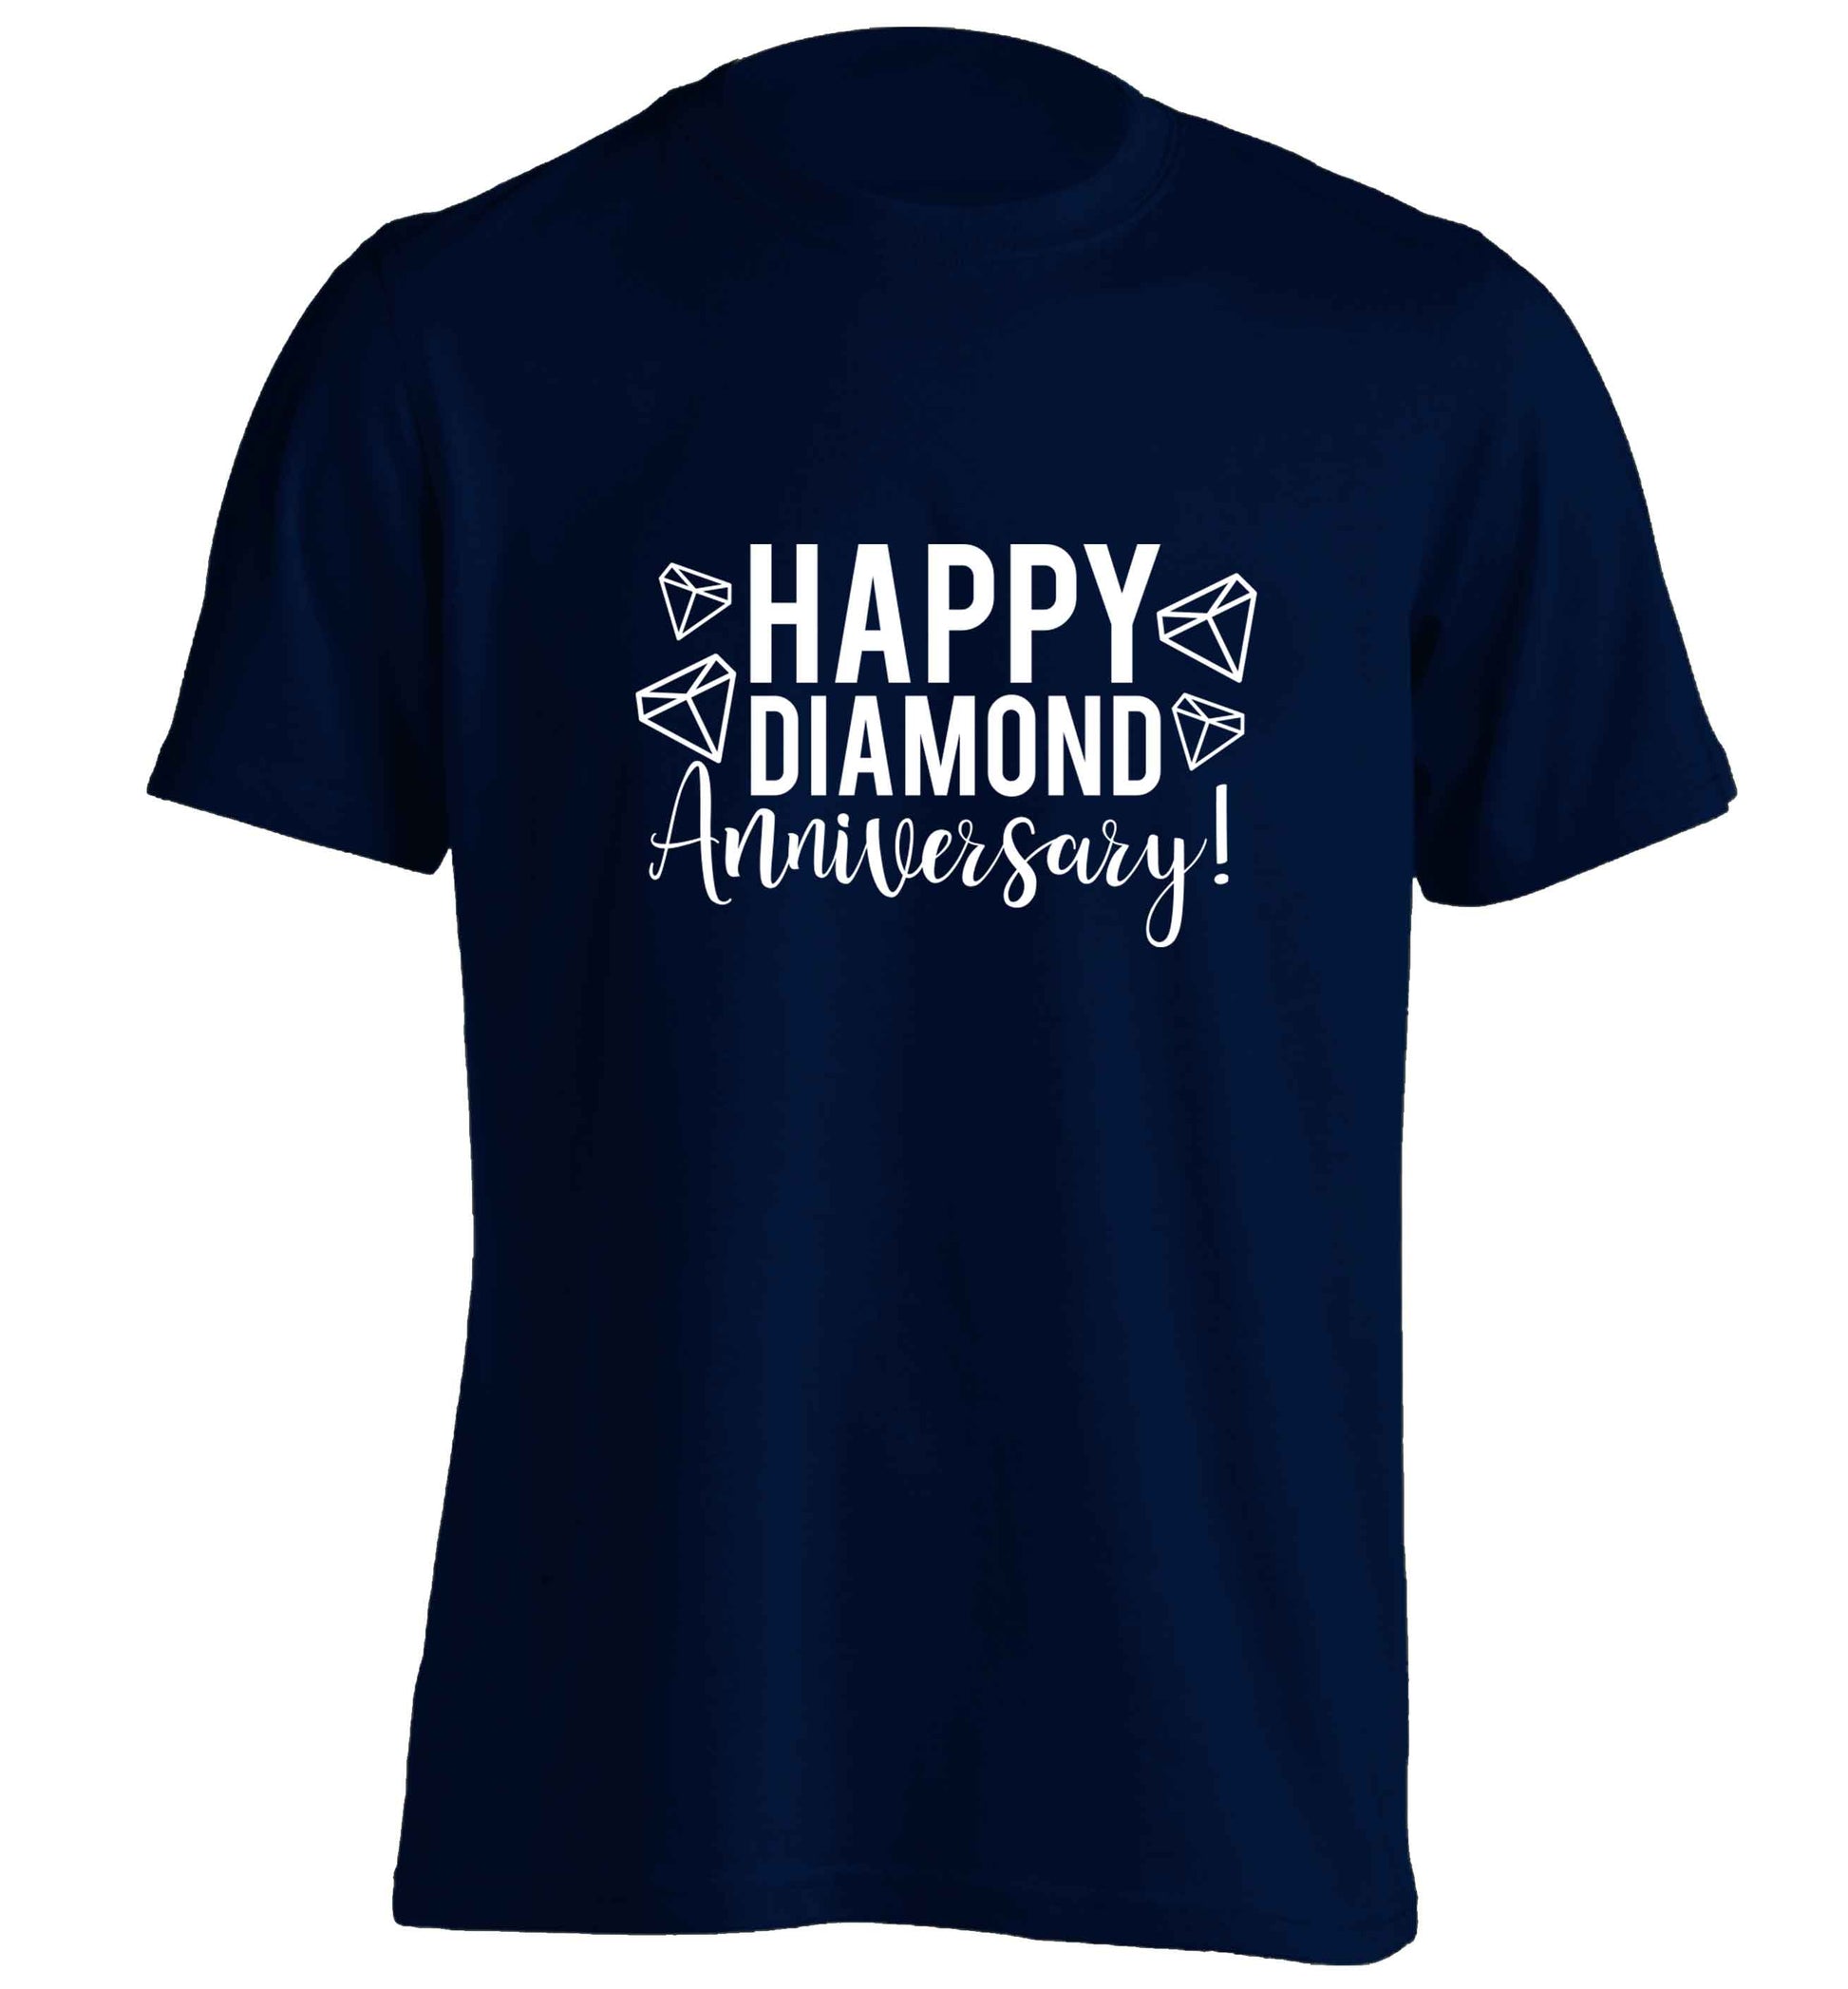 Happy diamond anniversary! adults unisex navy Tshirt 2XL